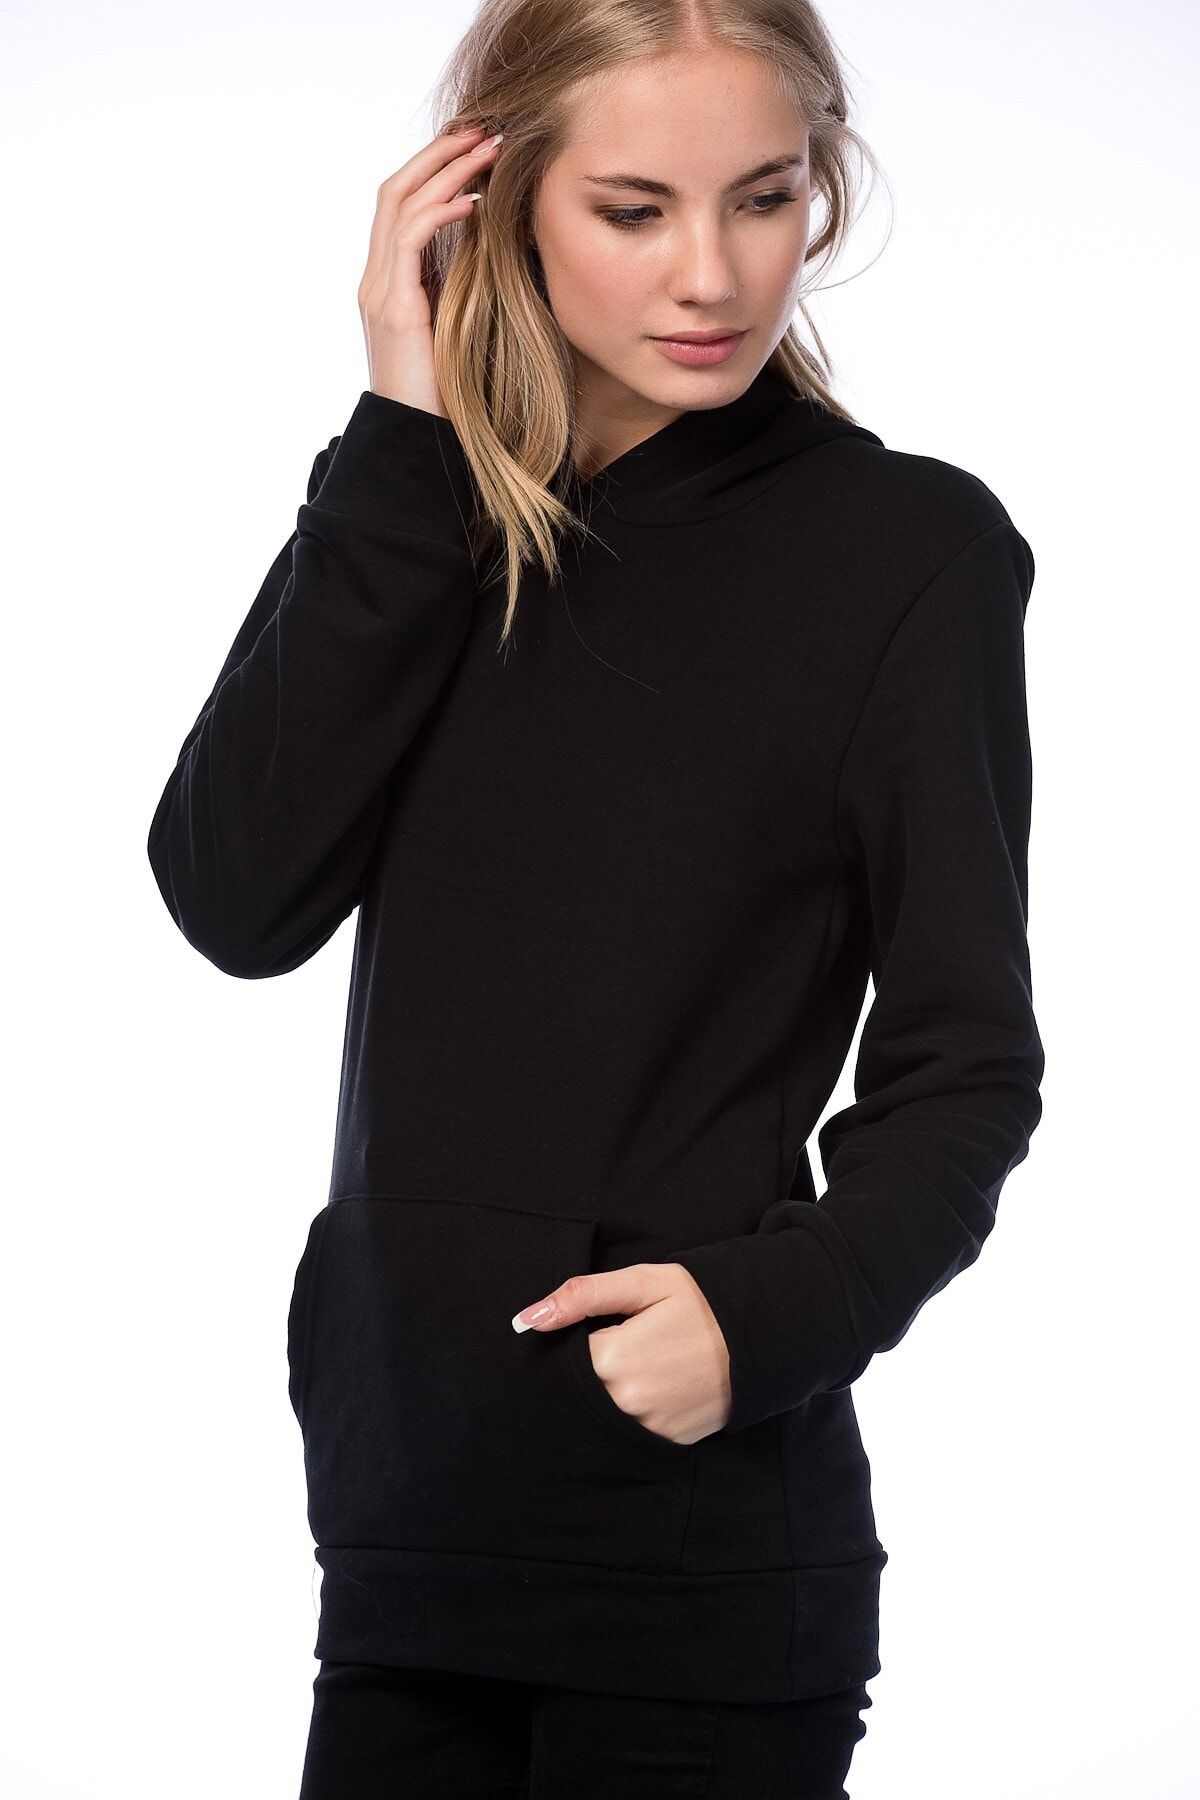 Mightee Kadın Siyah Sweatshirt - MWHD701